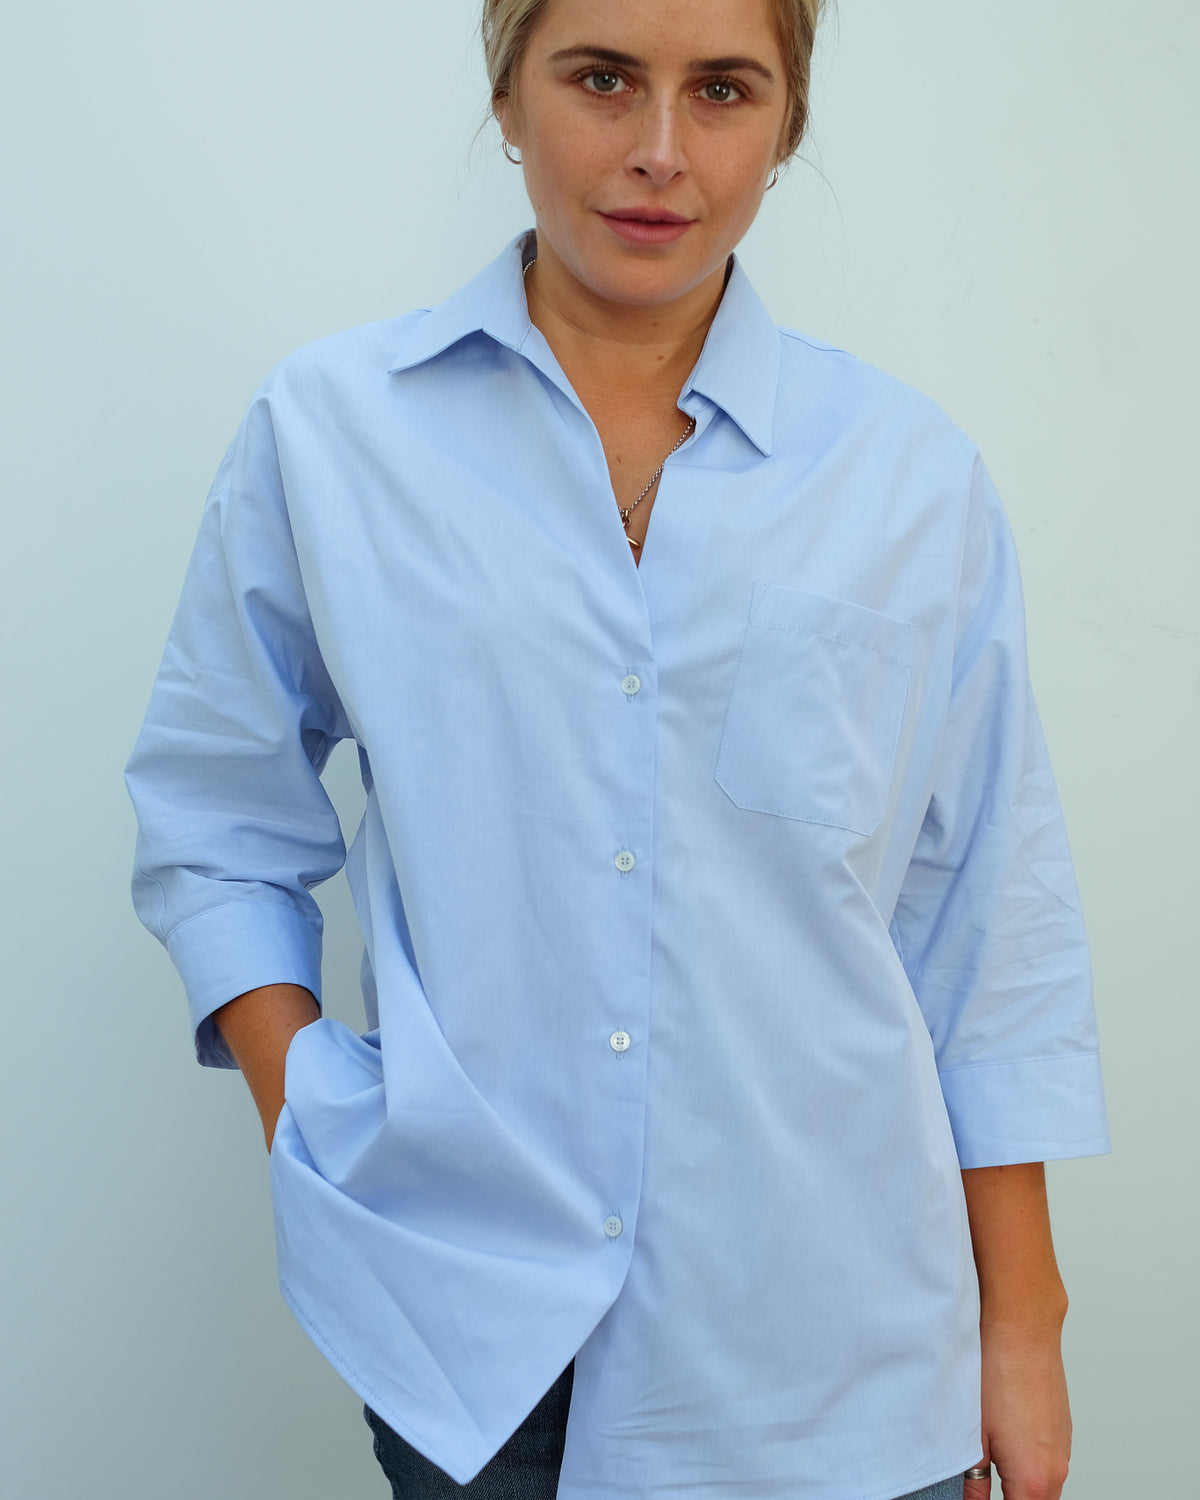 MM Ersilia shirt in azzurro